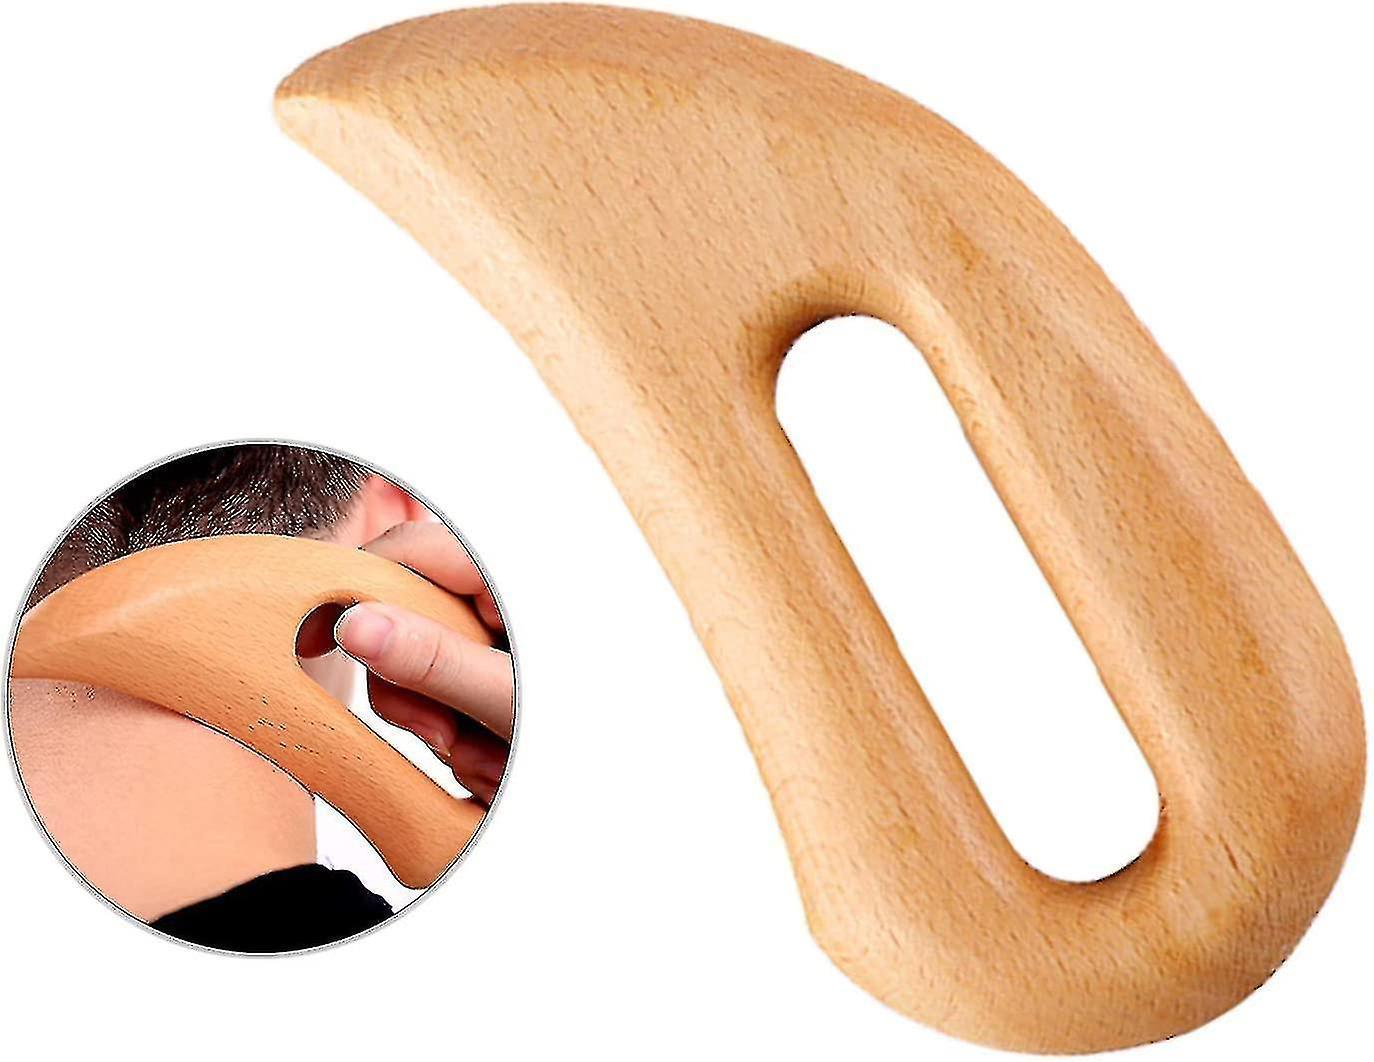 Wooden Lymphatic Drainage Massage Tool, Handheld Gua Sha Scraping Paddle-